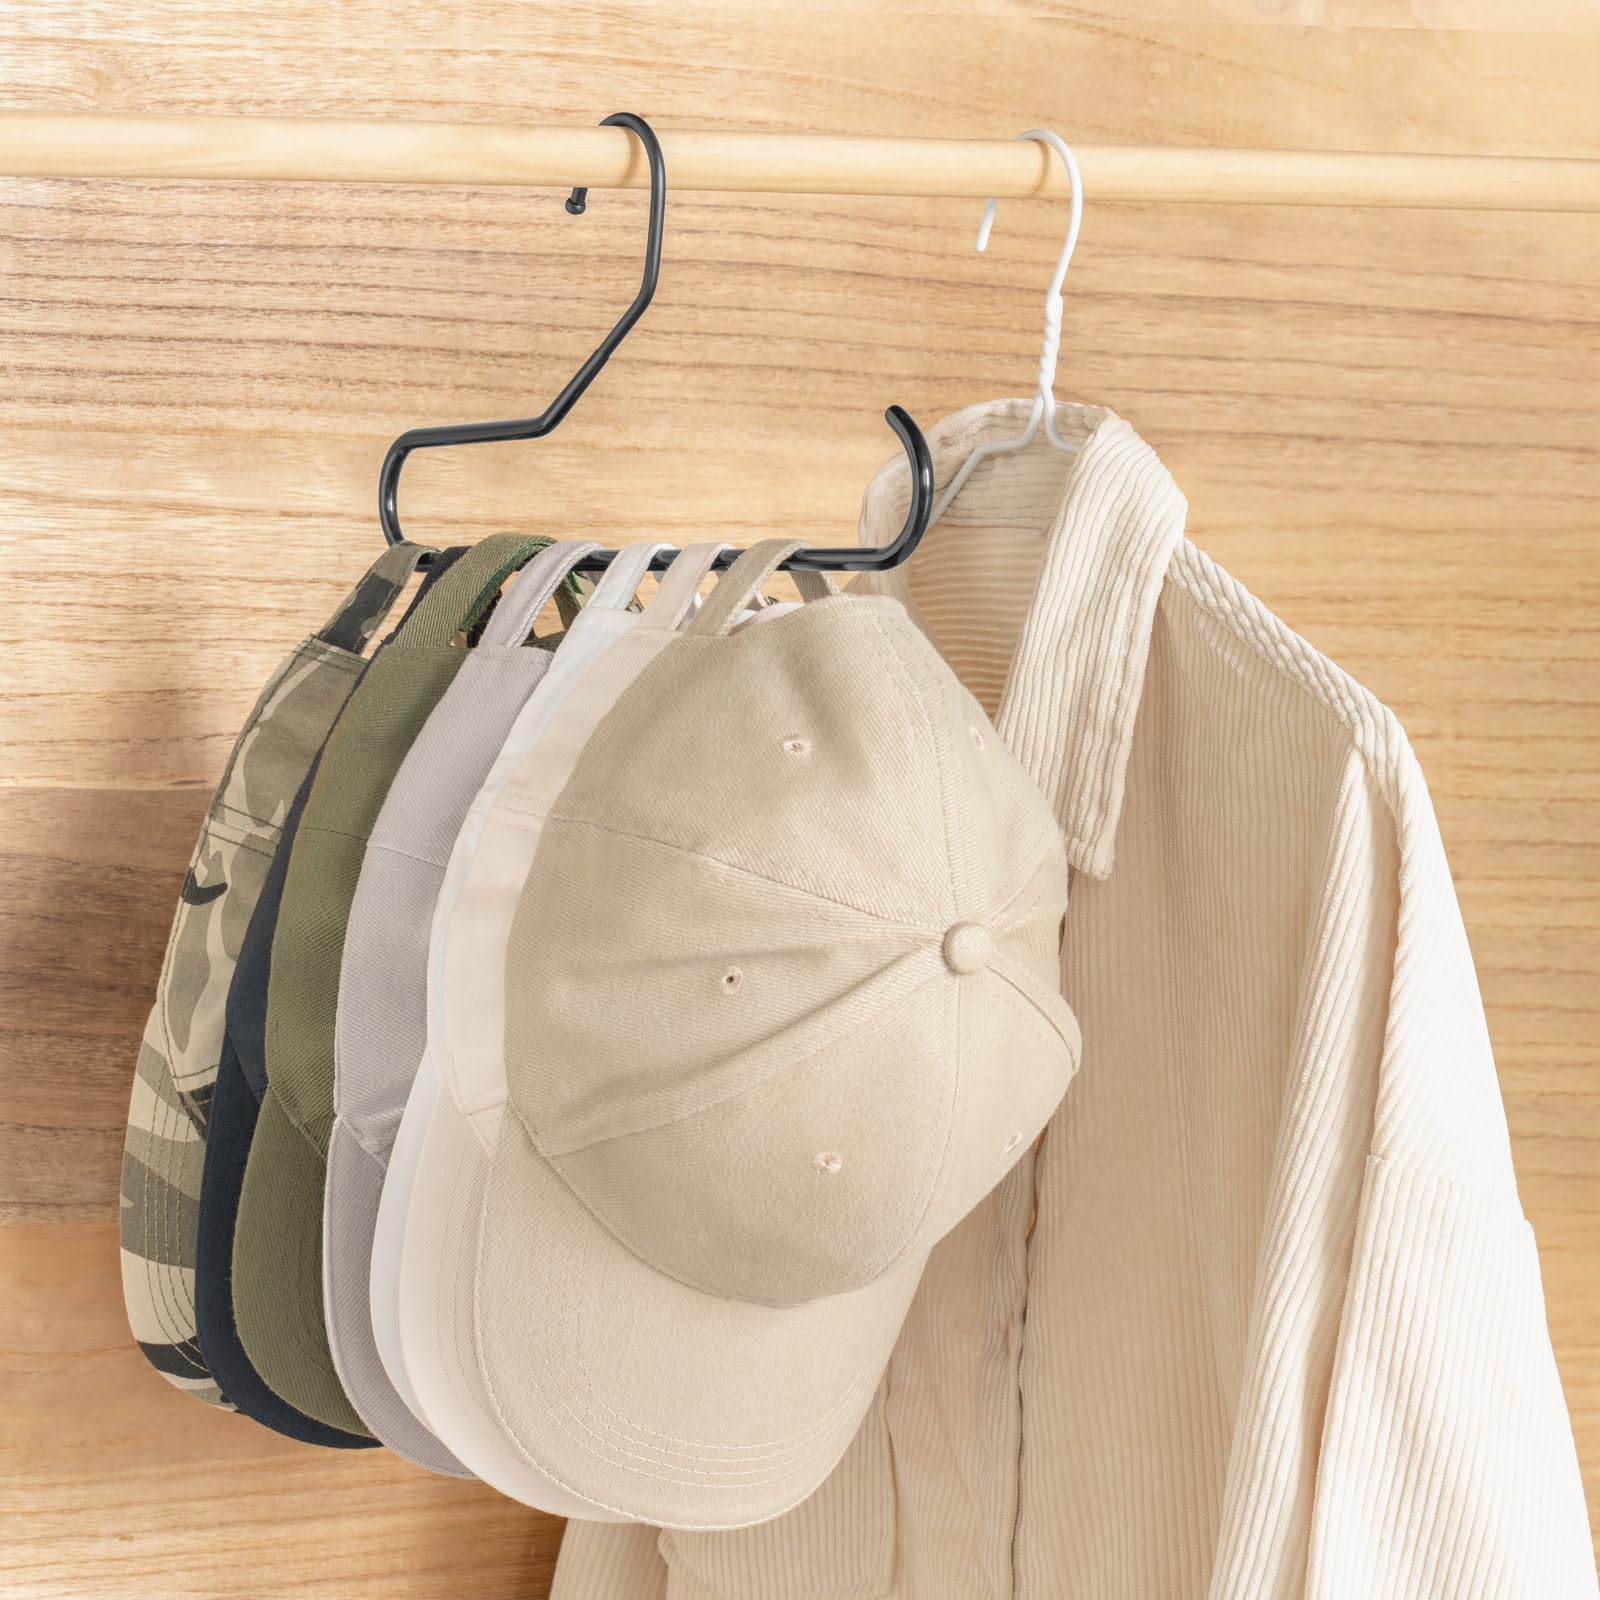 Mkono Hat Organizer for Baseball Caps Metal Hat Rack for Closet Set of 2 Hat Hangers Baseball Cap Holder Hat Storage Organizer Holds 20 Caps, Black